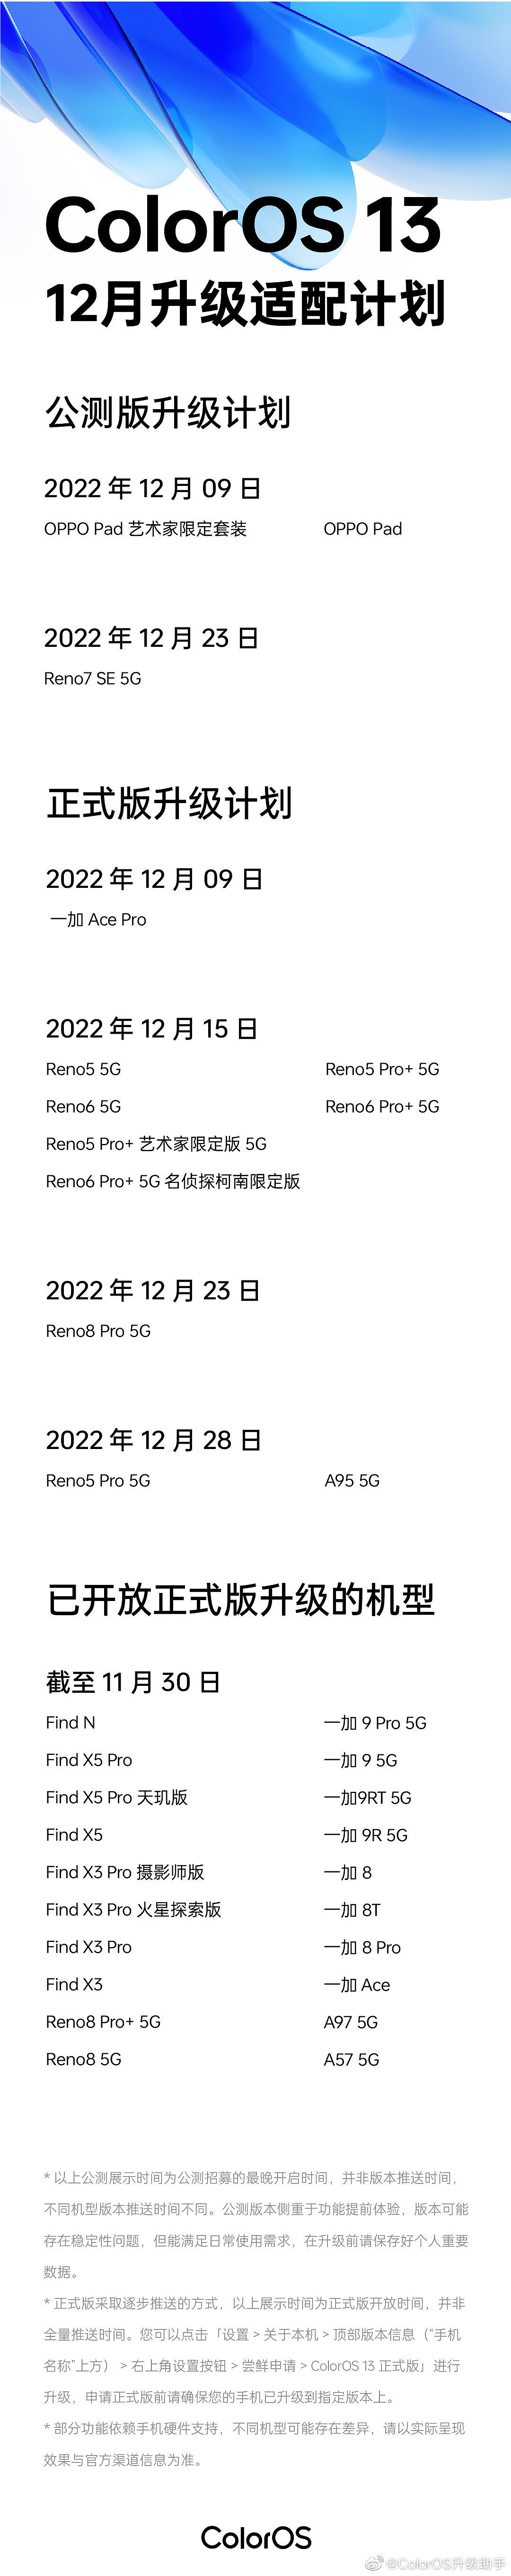 OPPO Reno5/6 Pro 现已开启 ColorOS 13 安卓 13 正式版升级 - 3